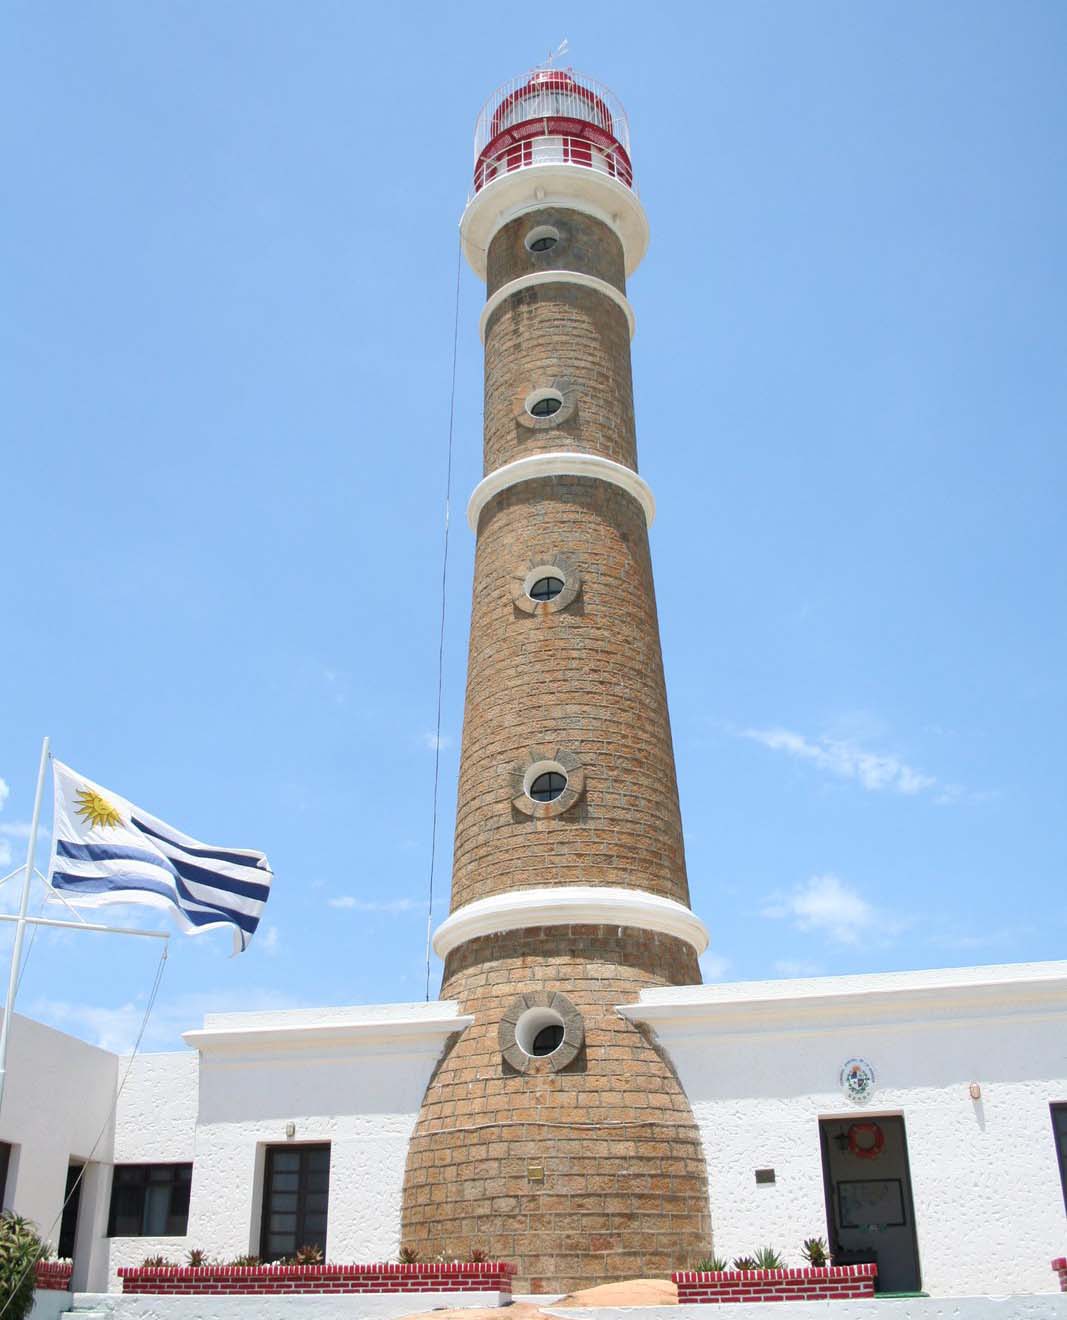 FARO CABO POLONIO 0 - Faros del Mundo (Lighthouses)